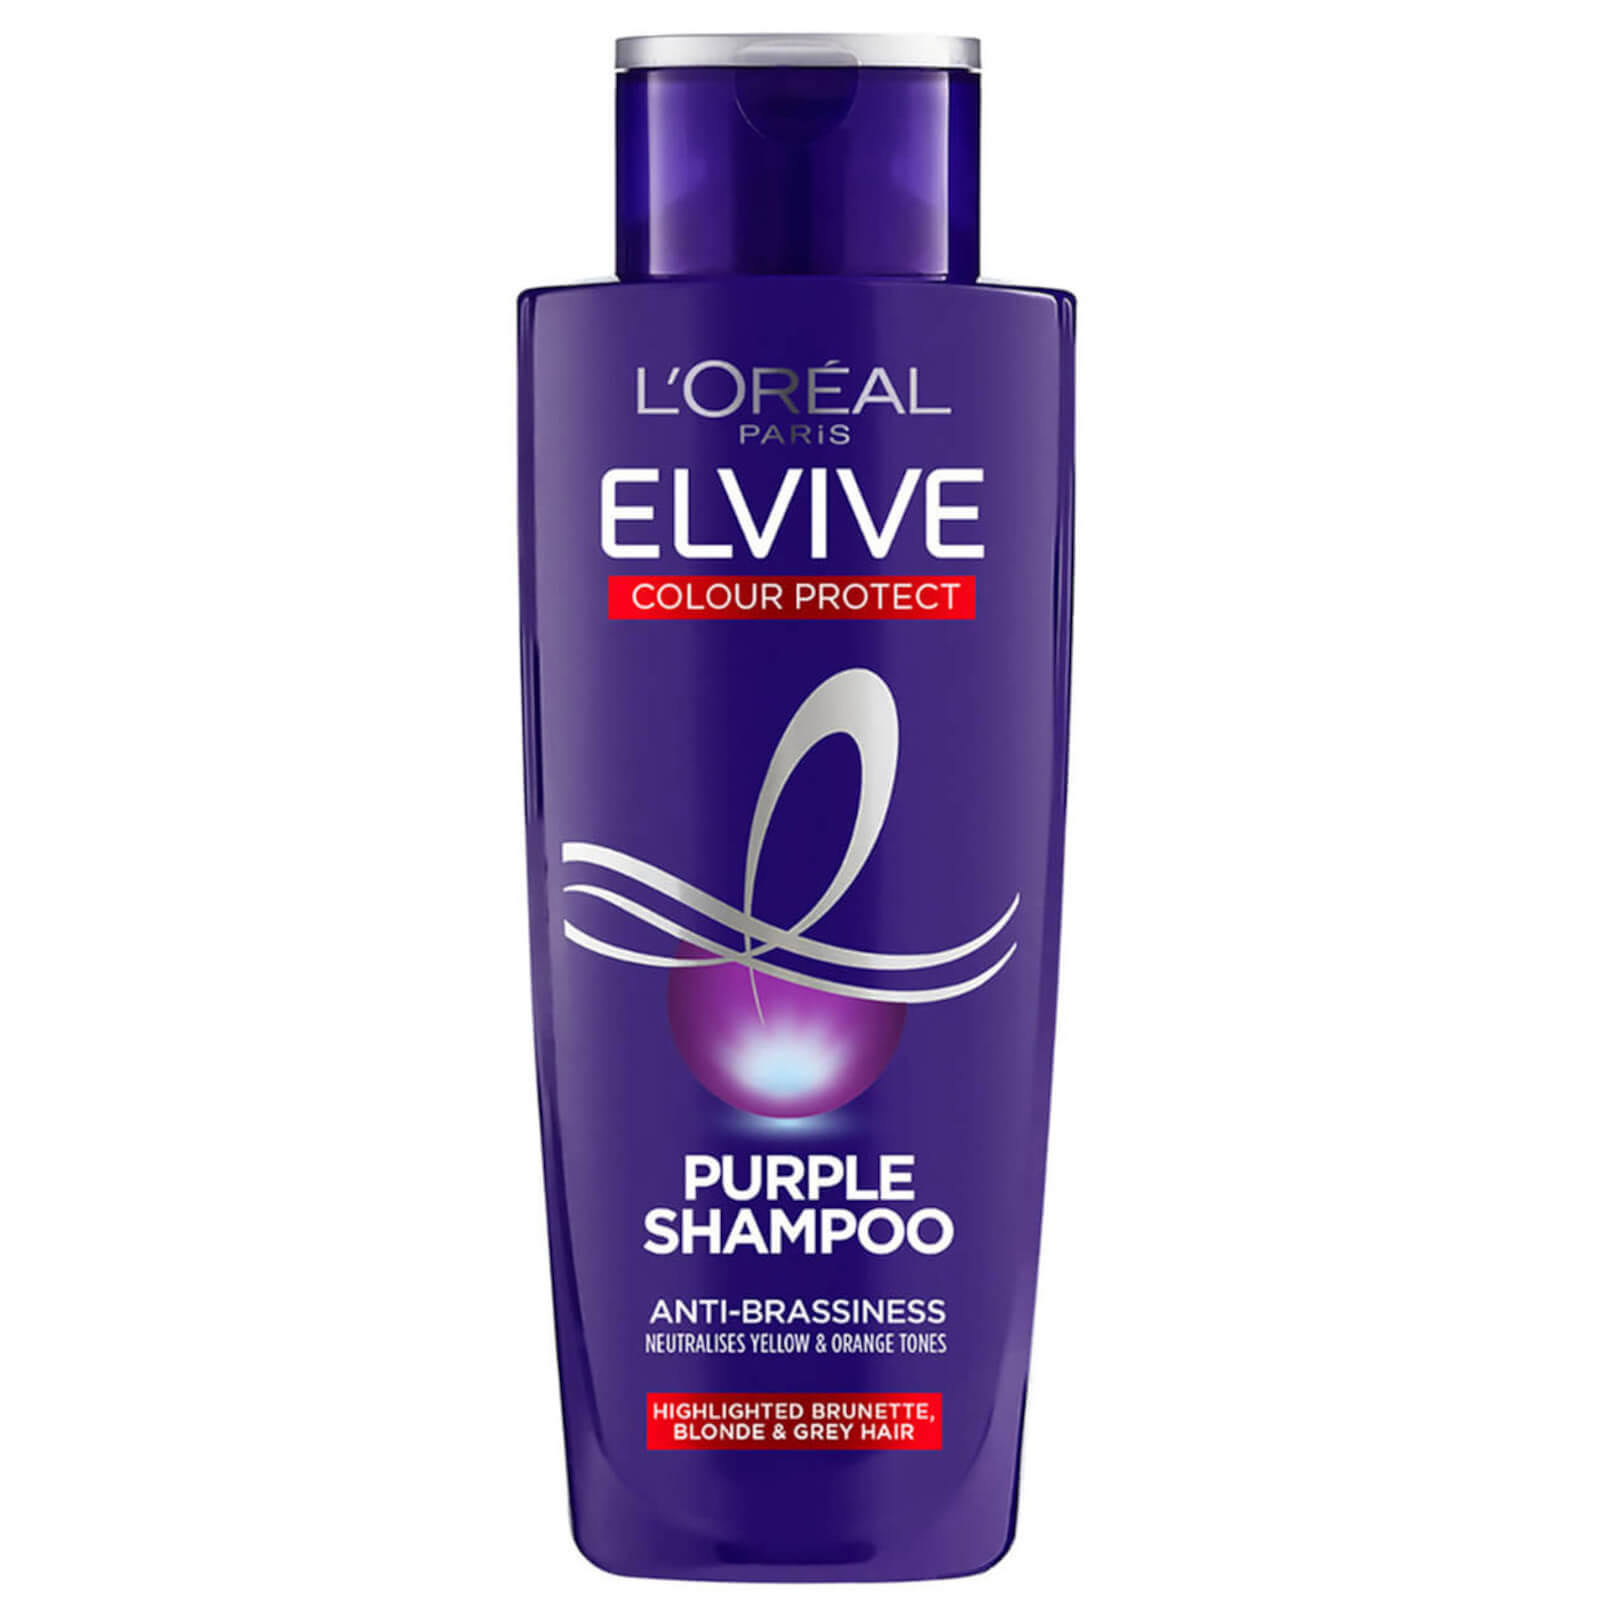 L'oreal Elvive Colour Protect Anti Brassiness Purple Shampoo - 200ml